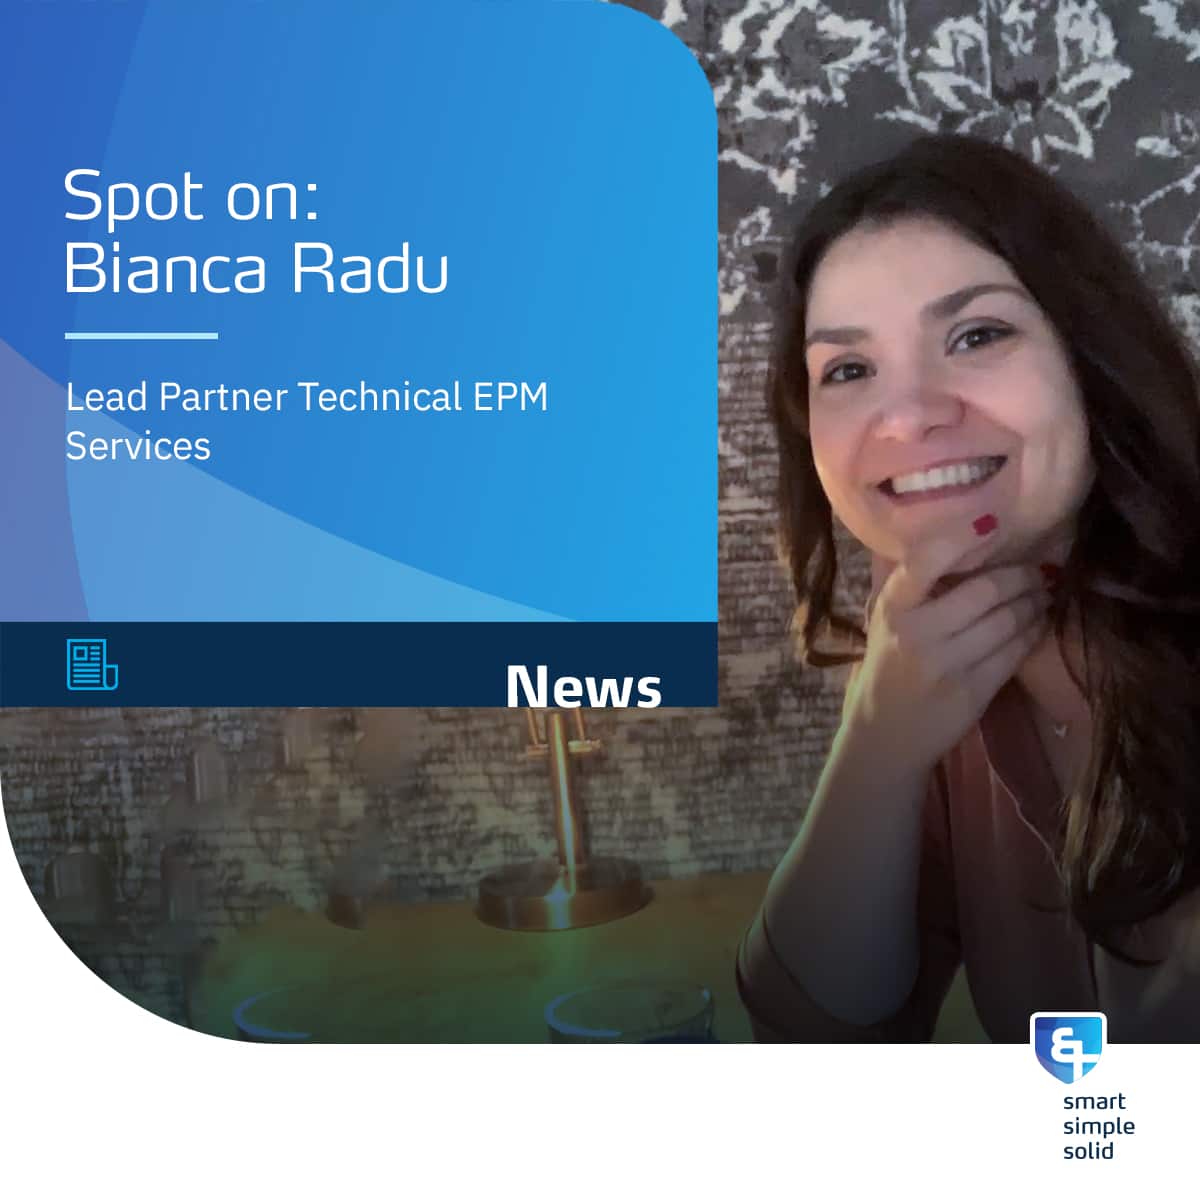 Spot on - Bianca Radu – Lead Partner Technical EPM Services